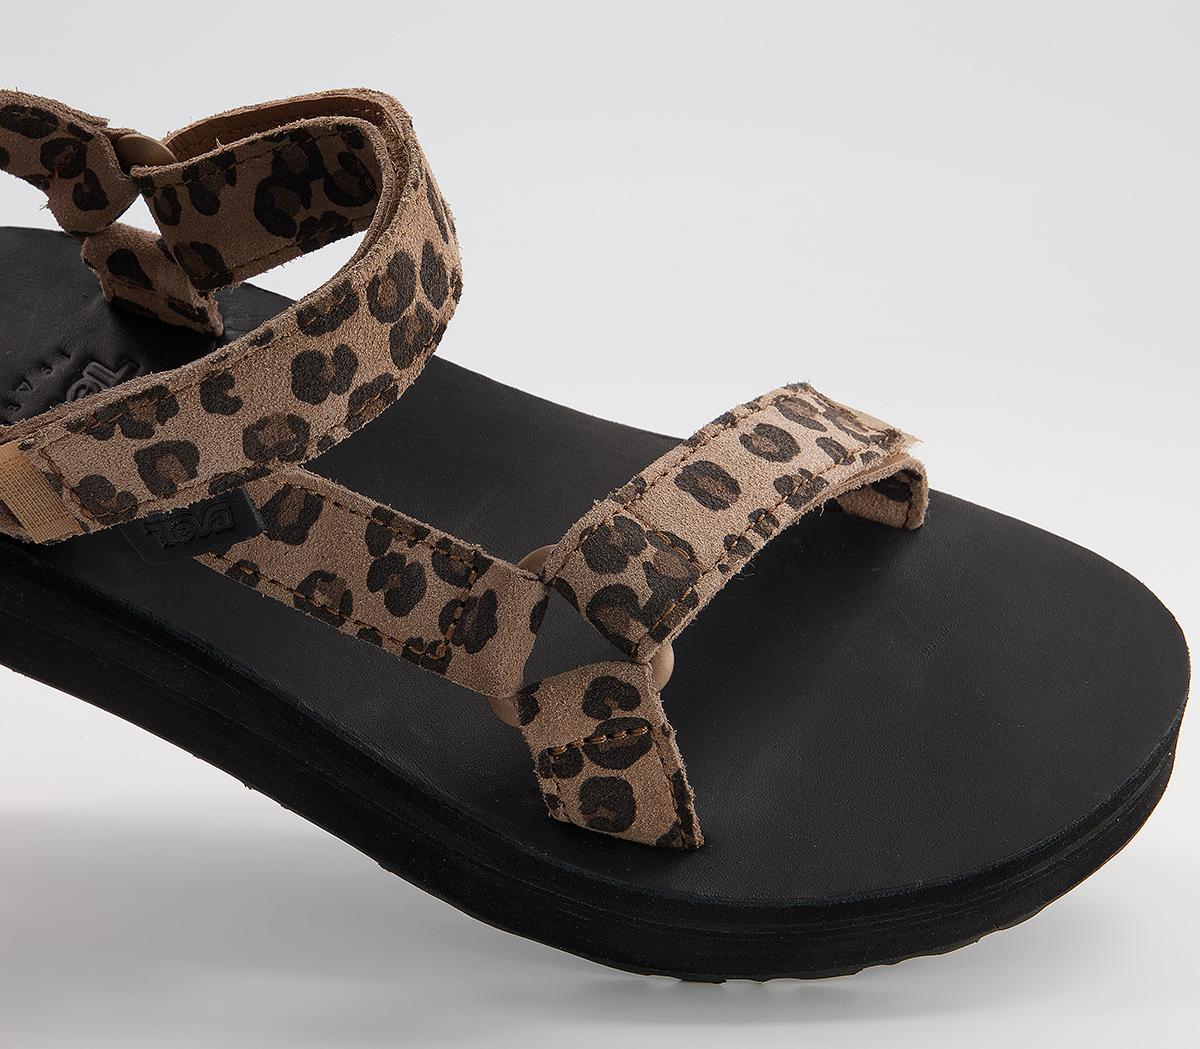 Teva Midform Universal Leather Sandals Leopard - Women’s Sandals